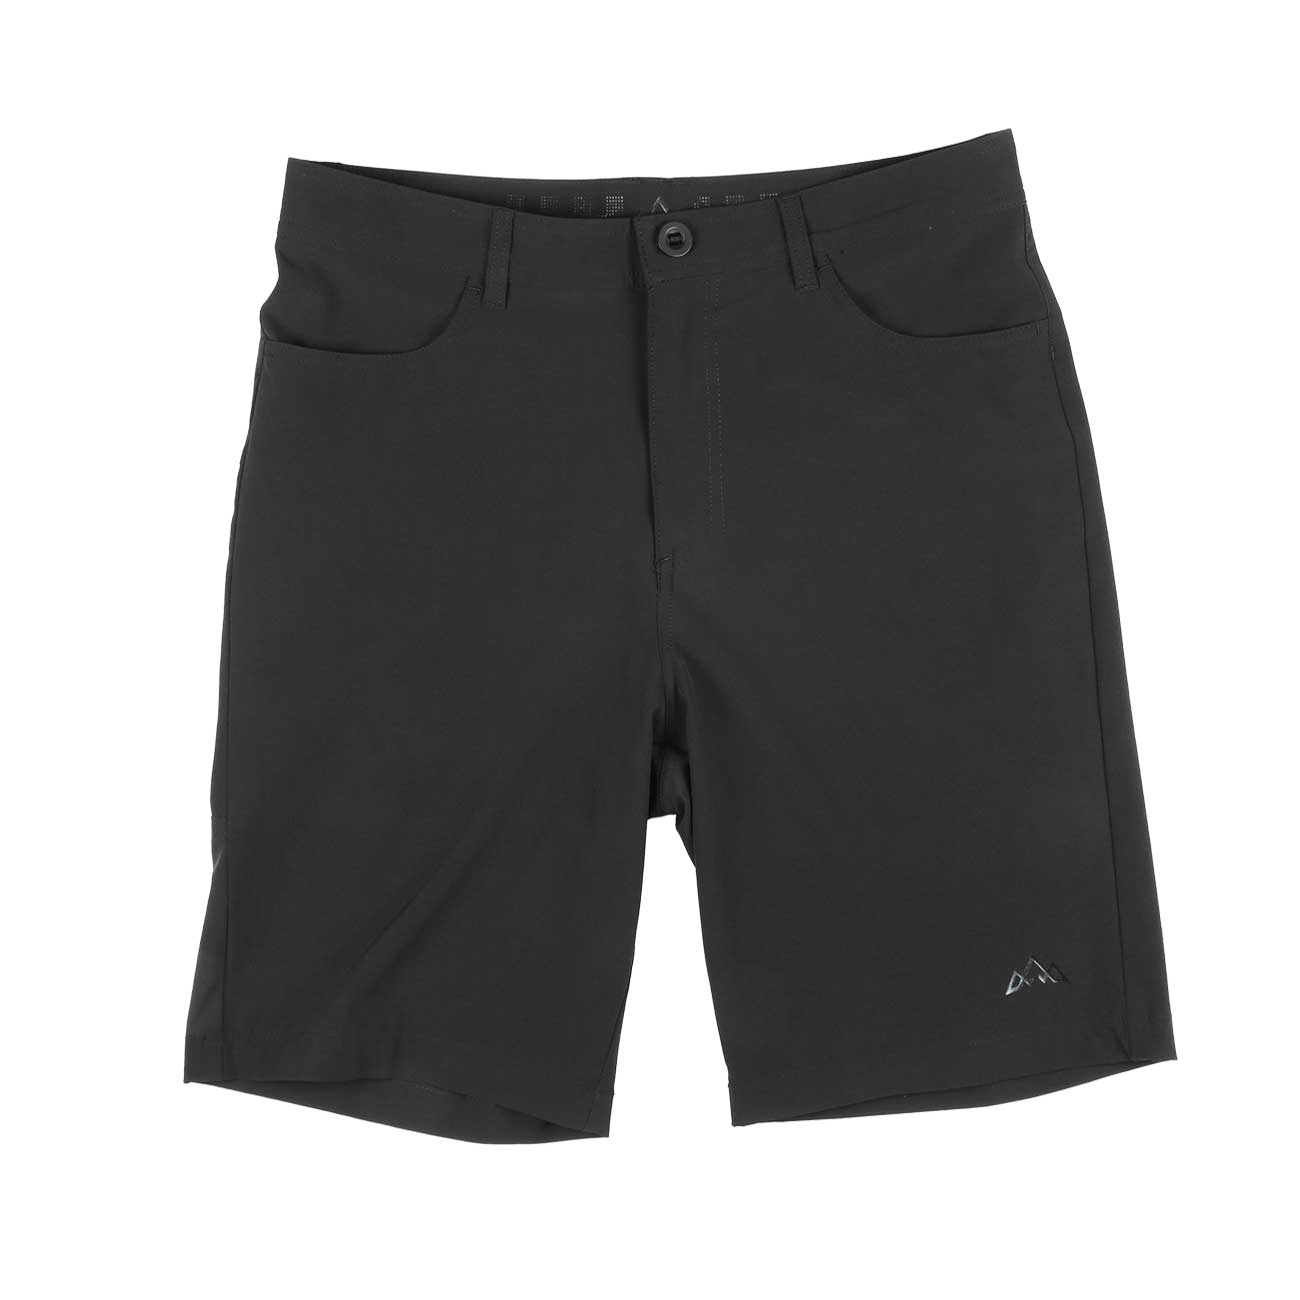 TASCO MTB Sessions hybrid MTB Shorts - Black, Front view